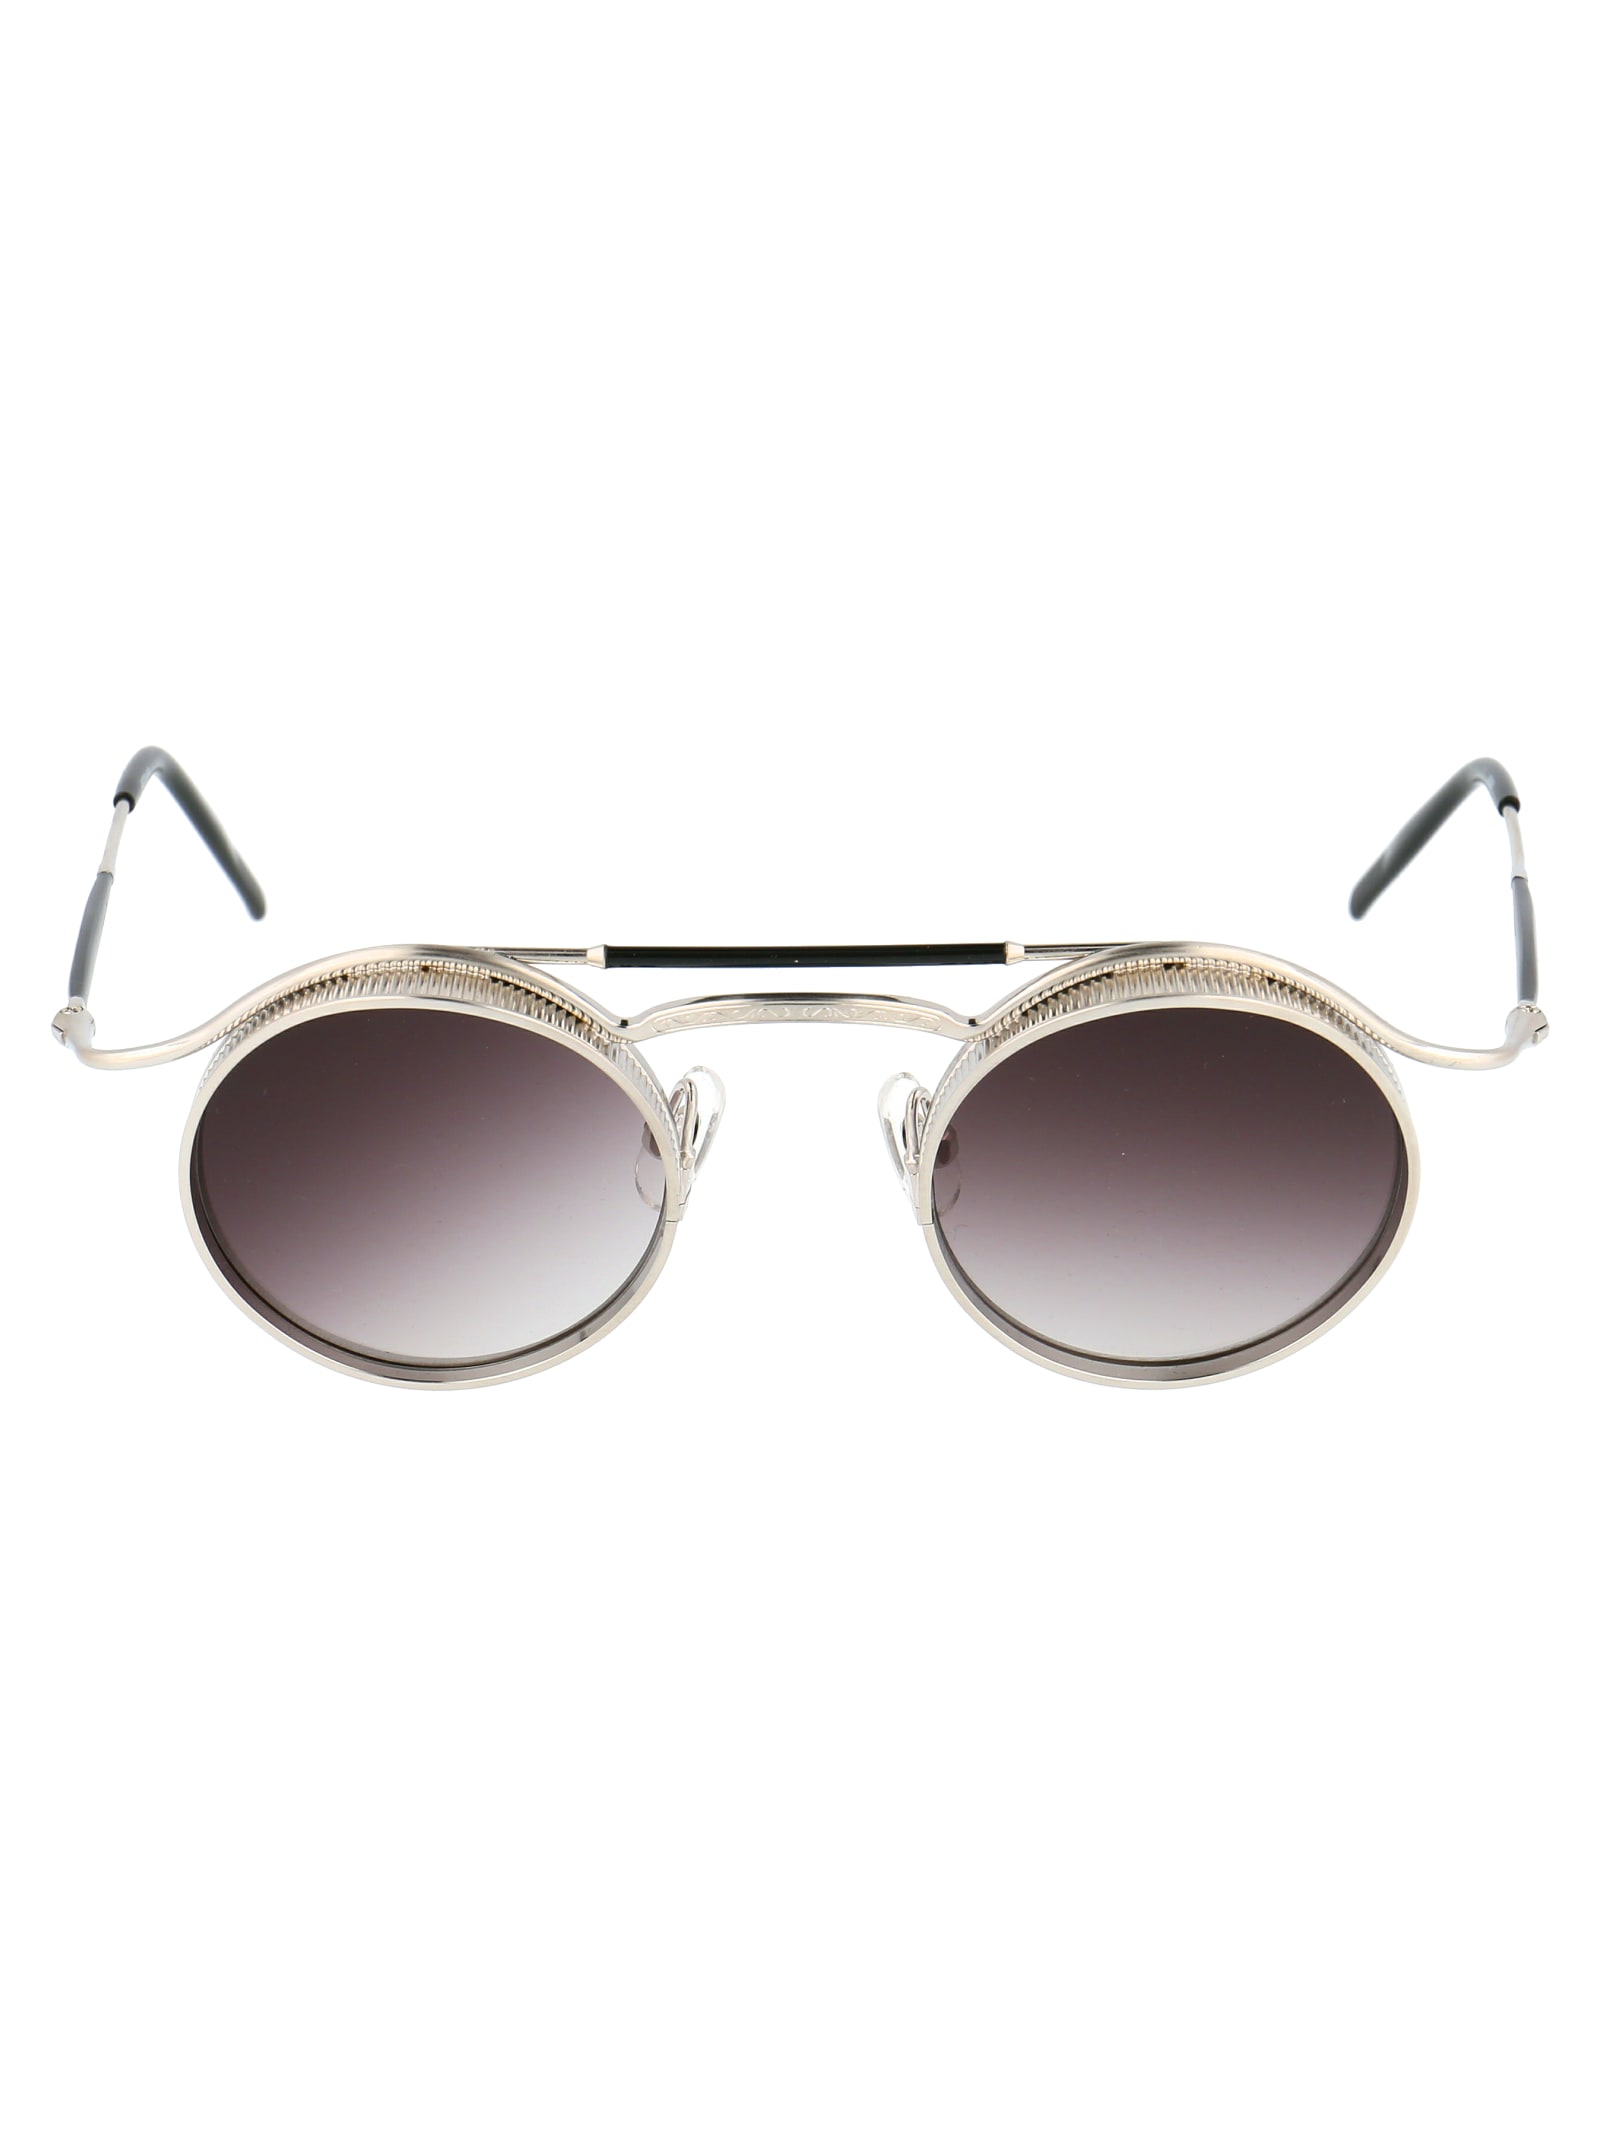 Matsuda 2903h Sunglasses In Brushed Silver